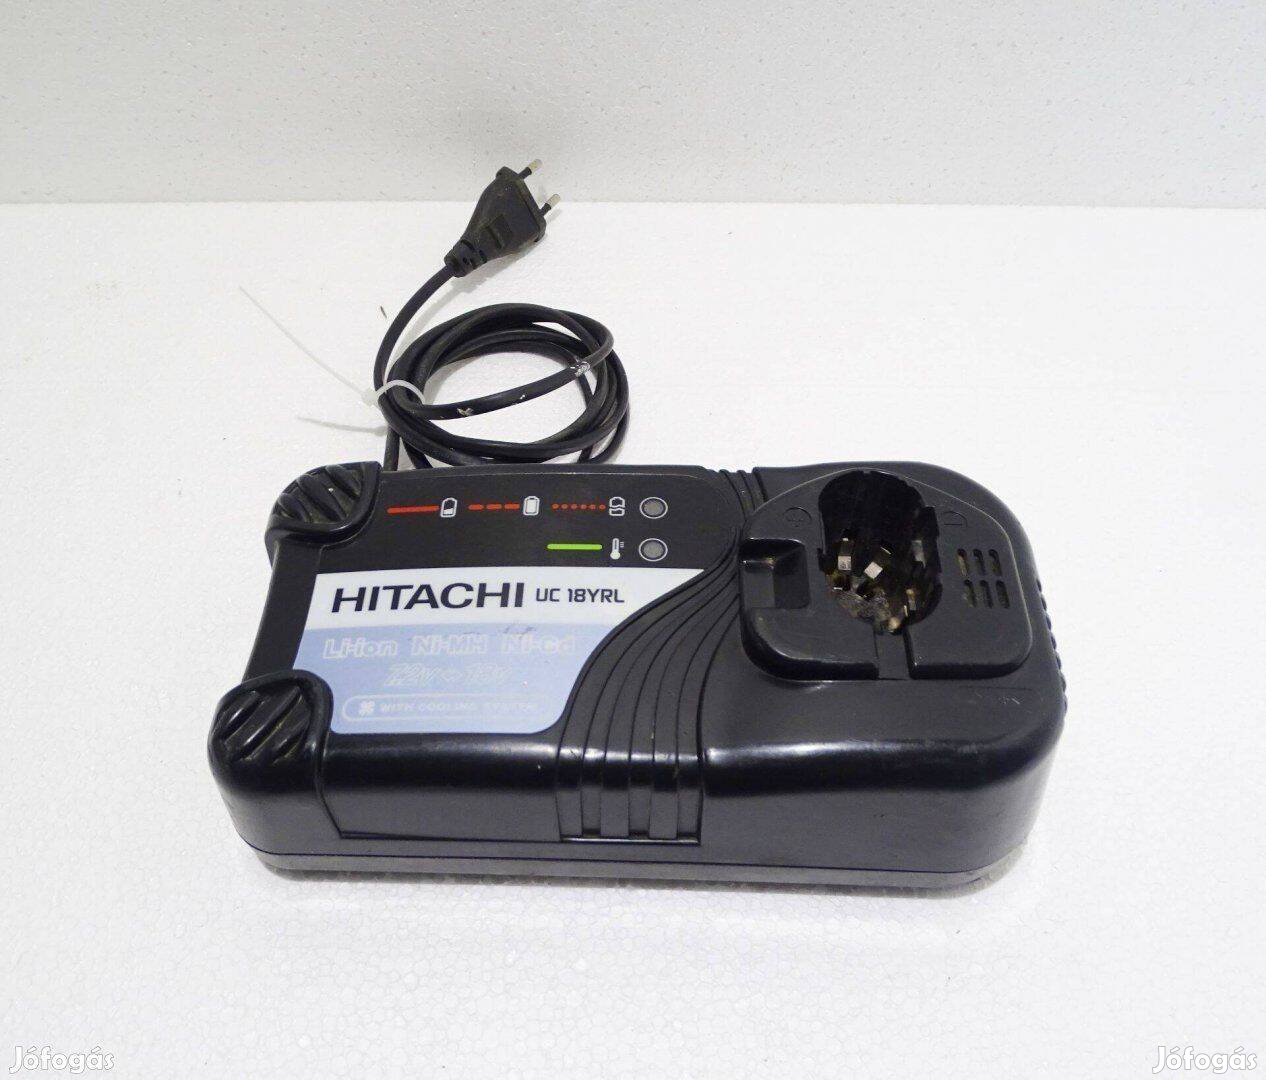 Hitachi UC 18Yrl akku akkumulátor töltő 7.2- 18 V Li-Ion, Ni-Mh